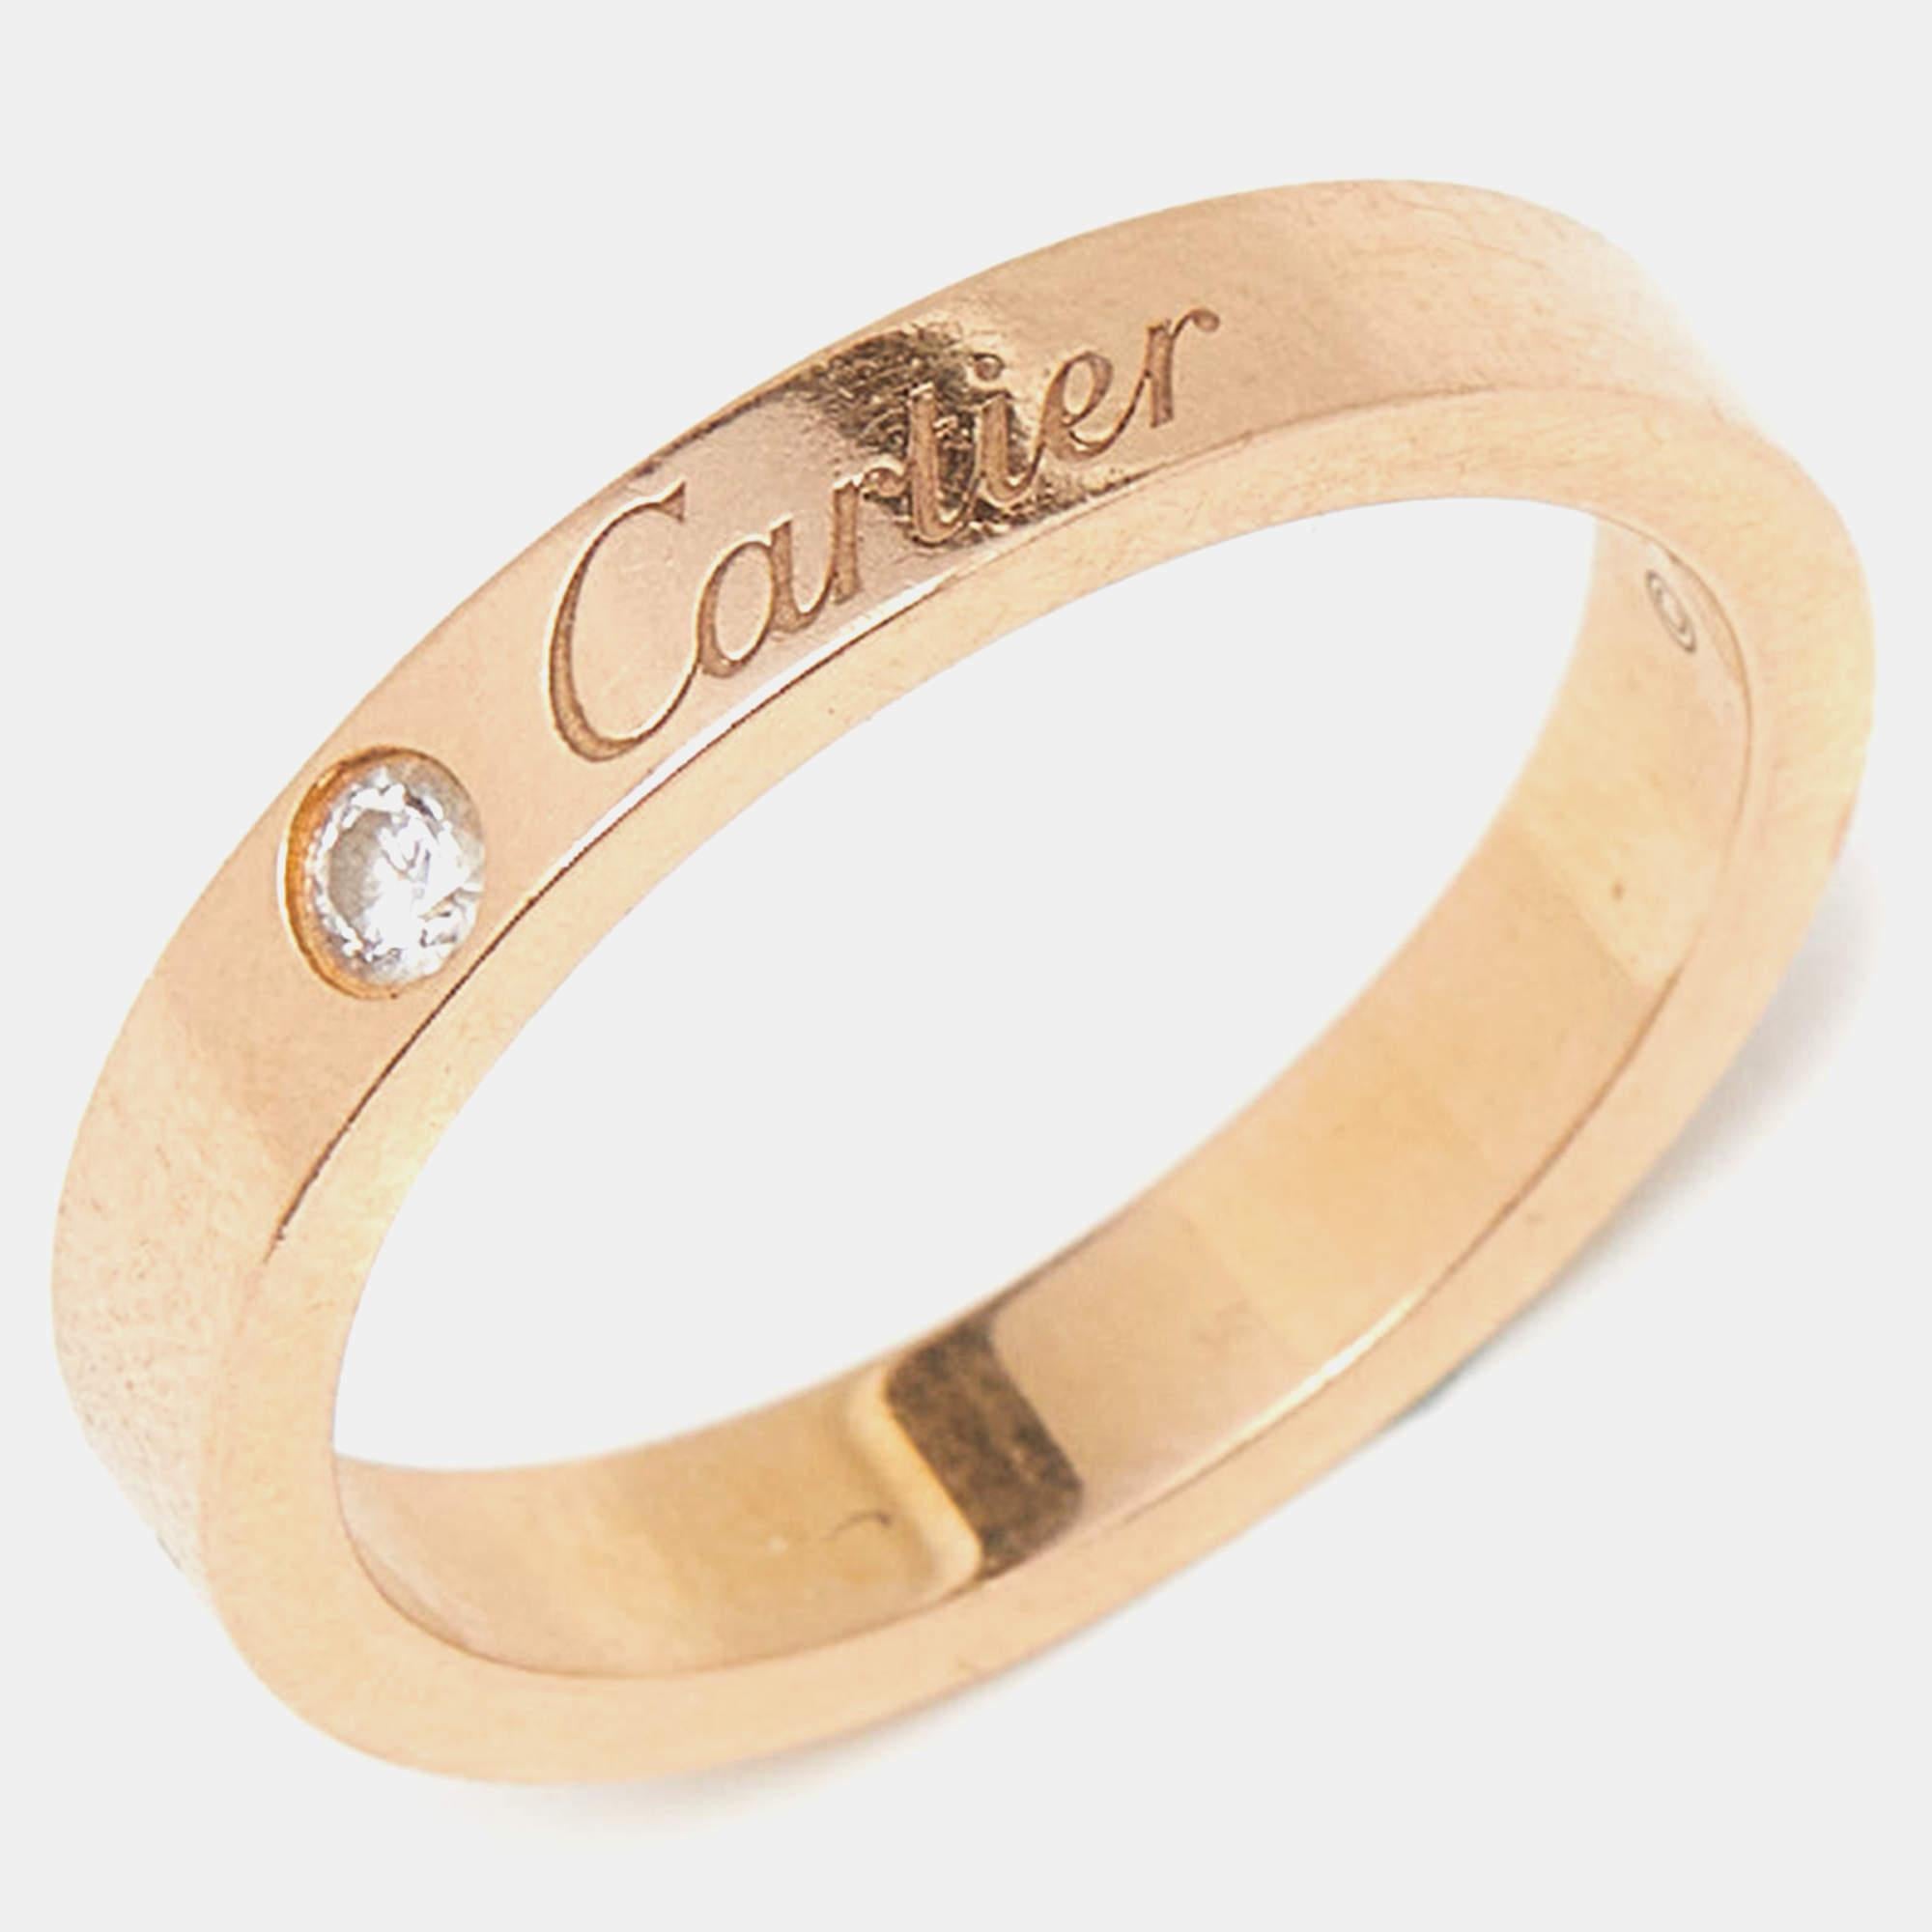 Cartier C De Cartier Diamond 18k Rose Gold Ring Size 50 2